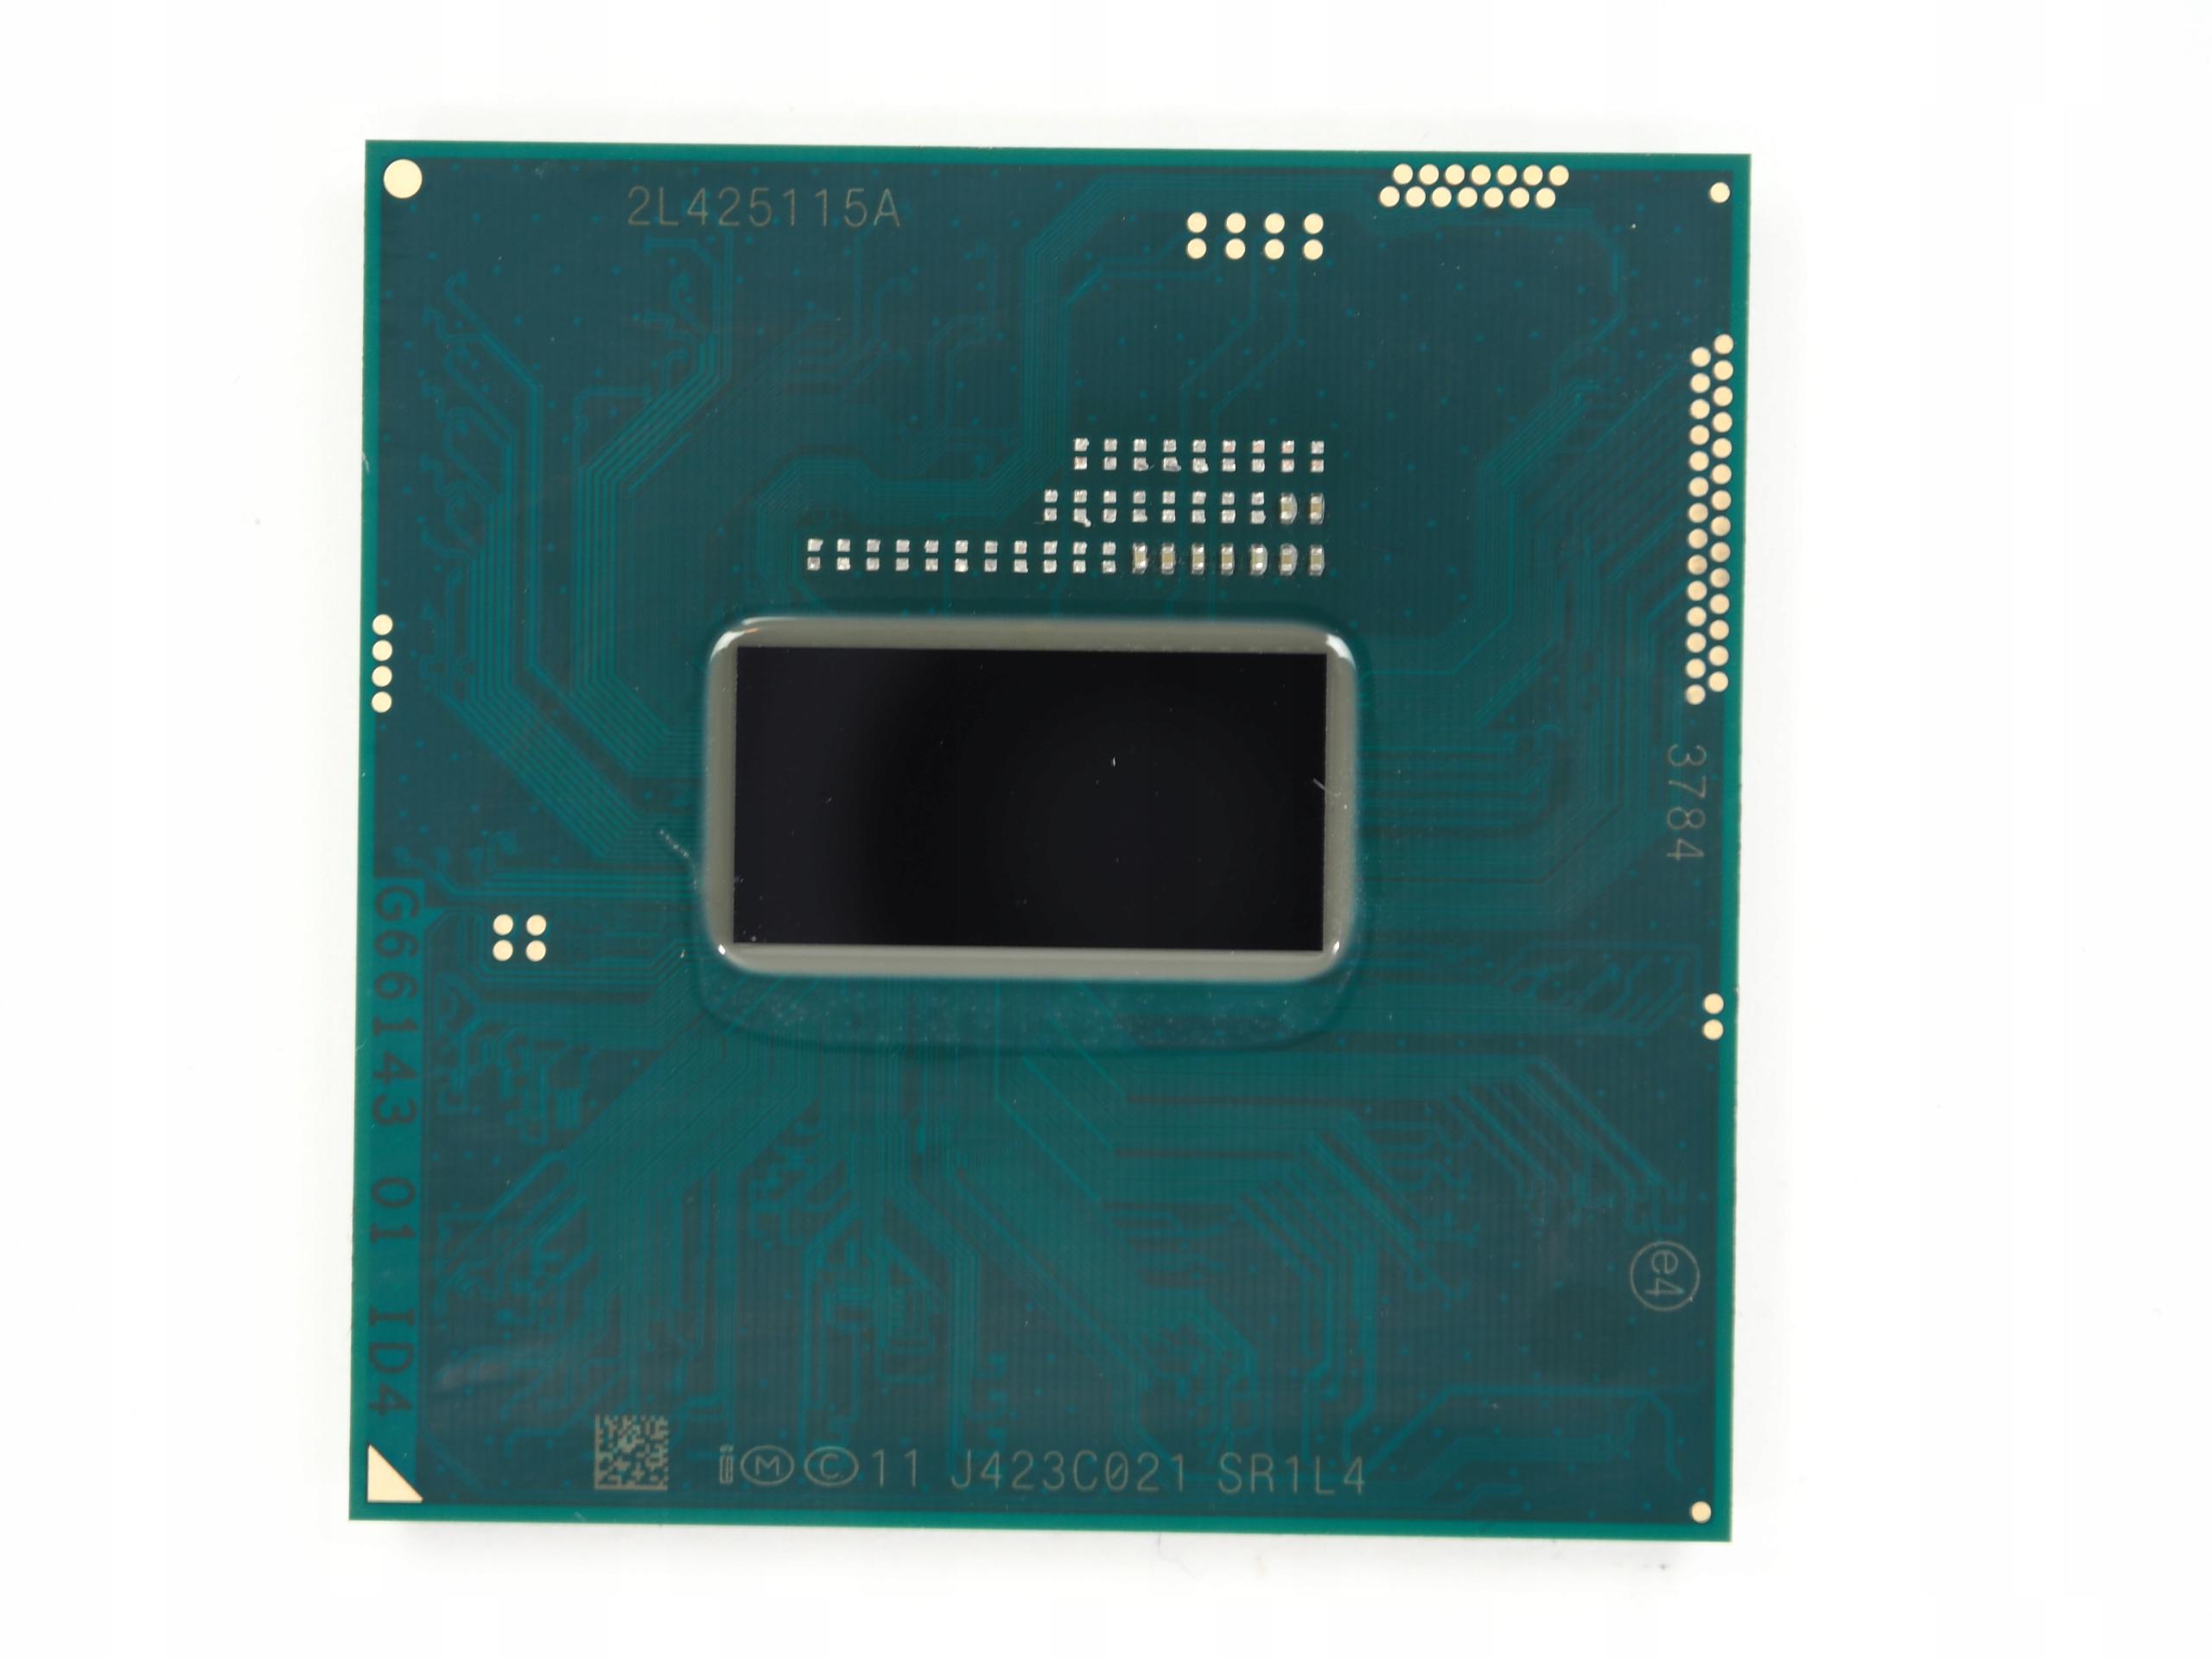 Procesor Intel Core i5-4300M 2.60GHz, 3MB Cache, Socket FCPGA946